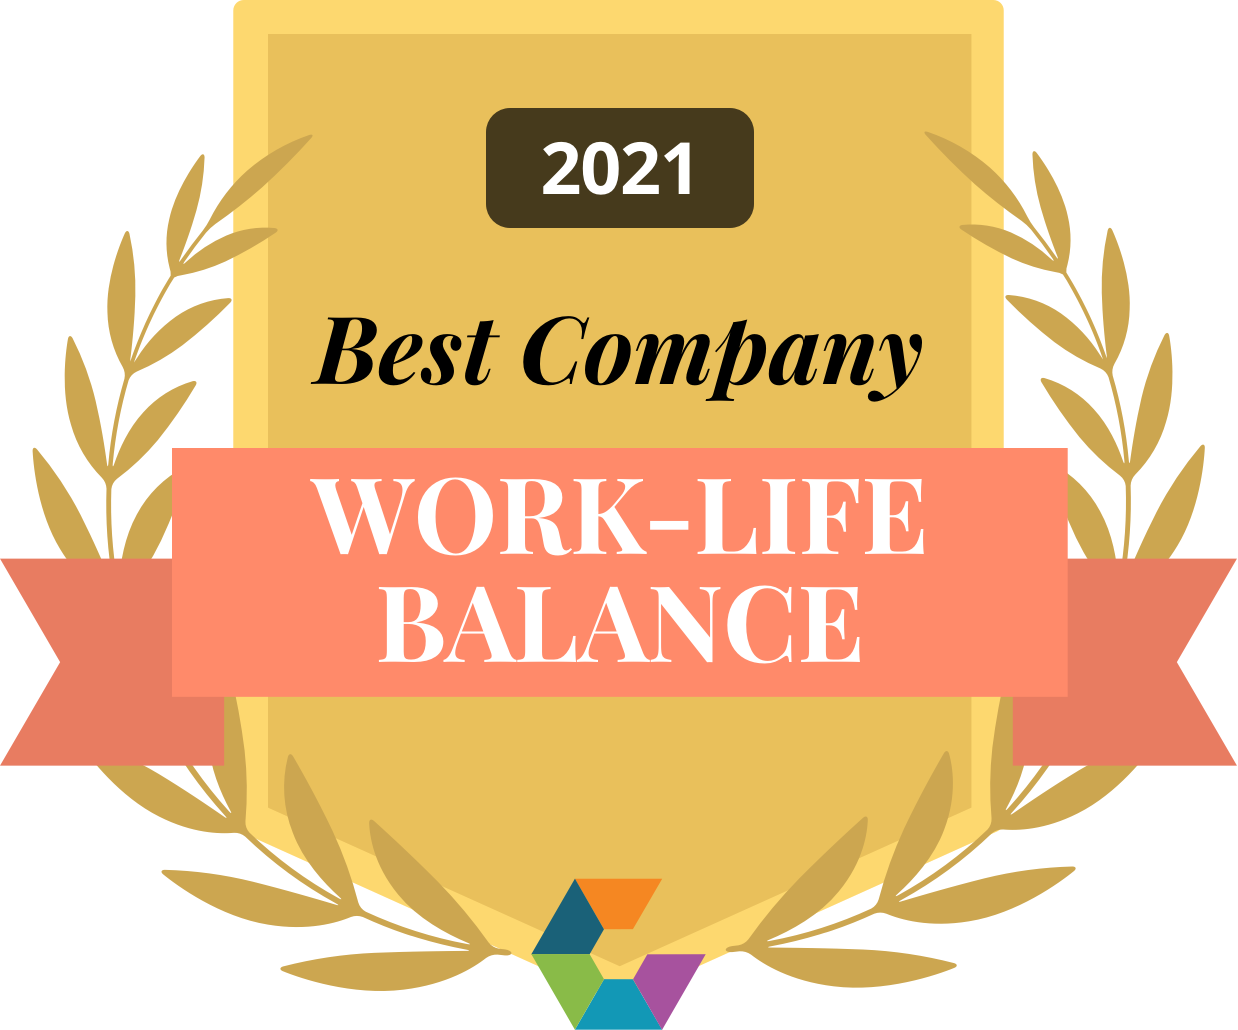 Comparably Award | Work Life Balance 2021 | Smartsheet